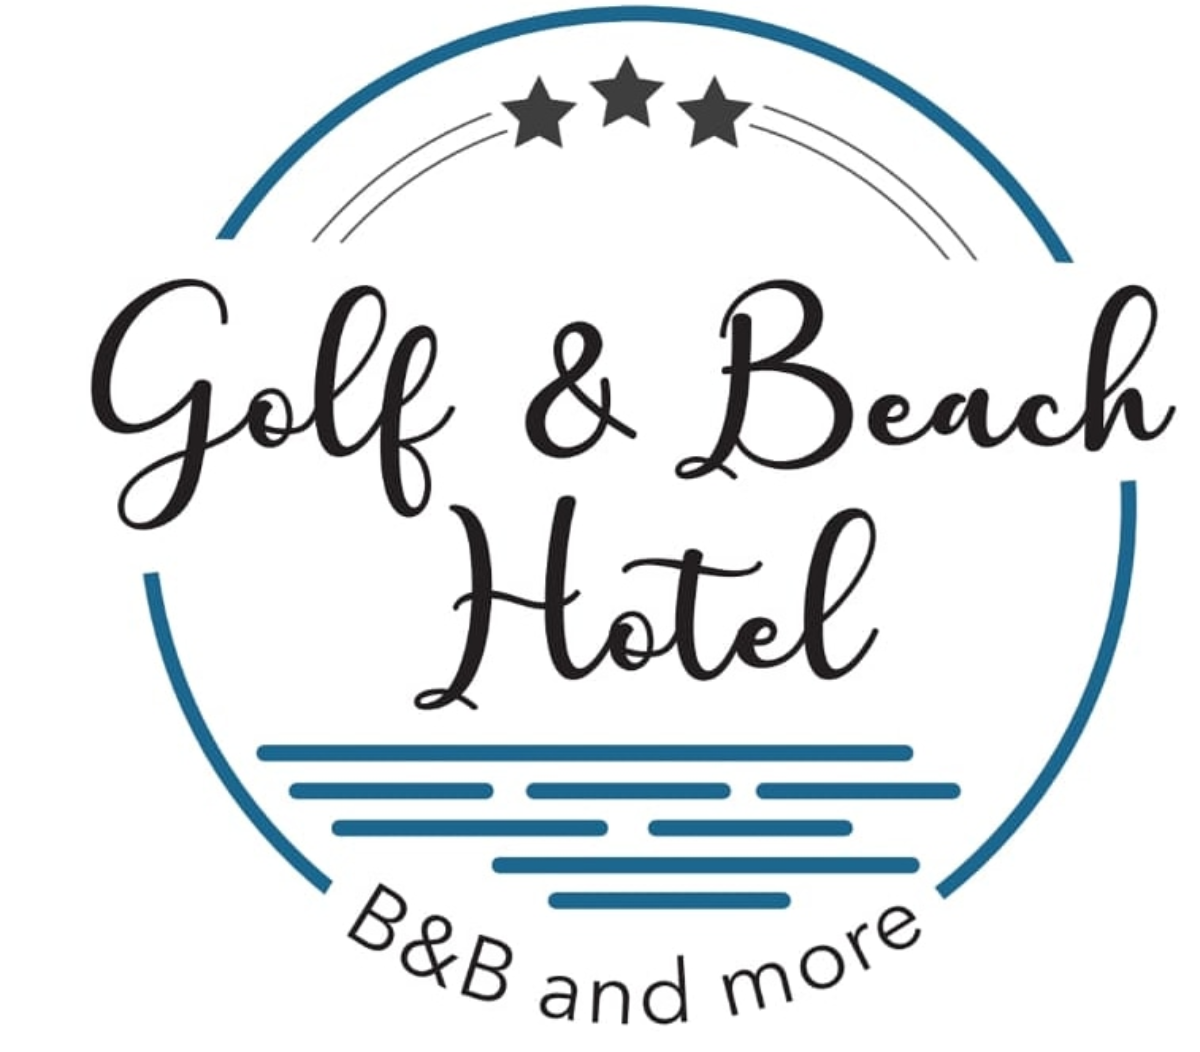 Golf &Beach Hotel